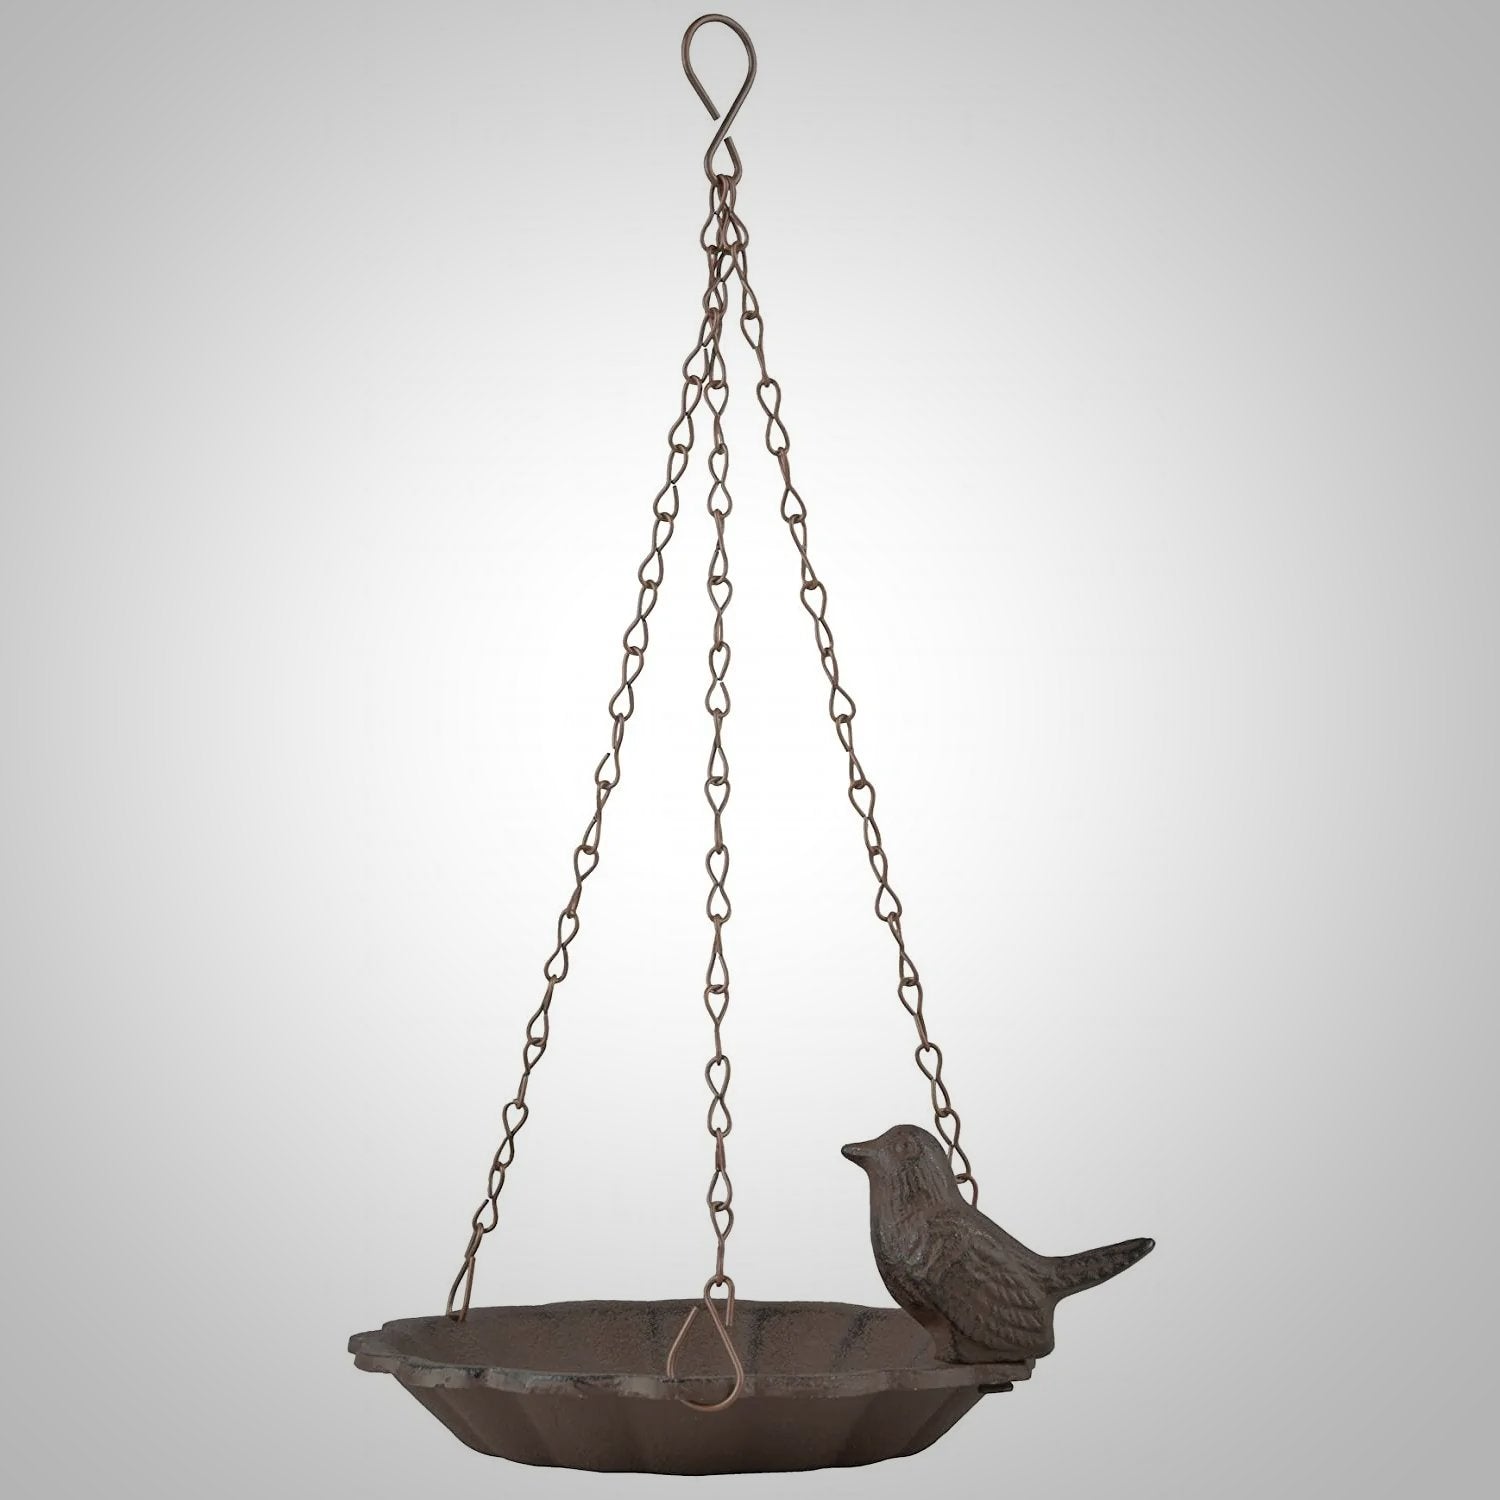 Cast Iron Antinque Brown Hanging Bird Bath